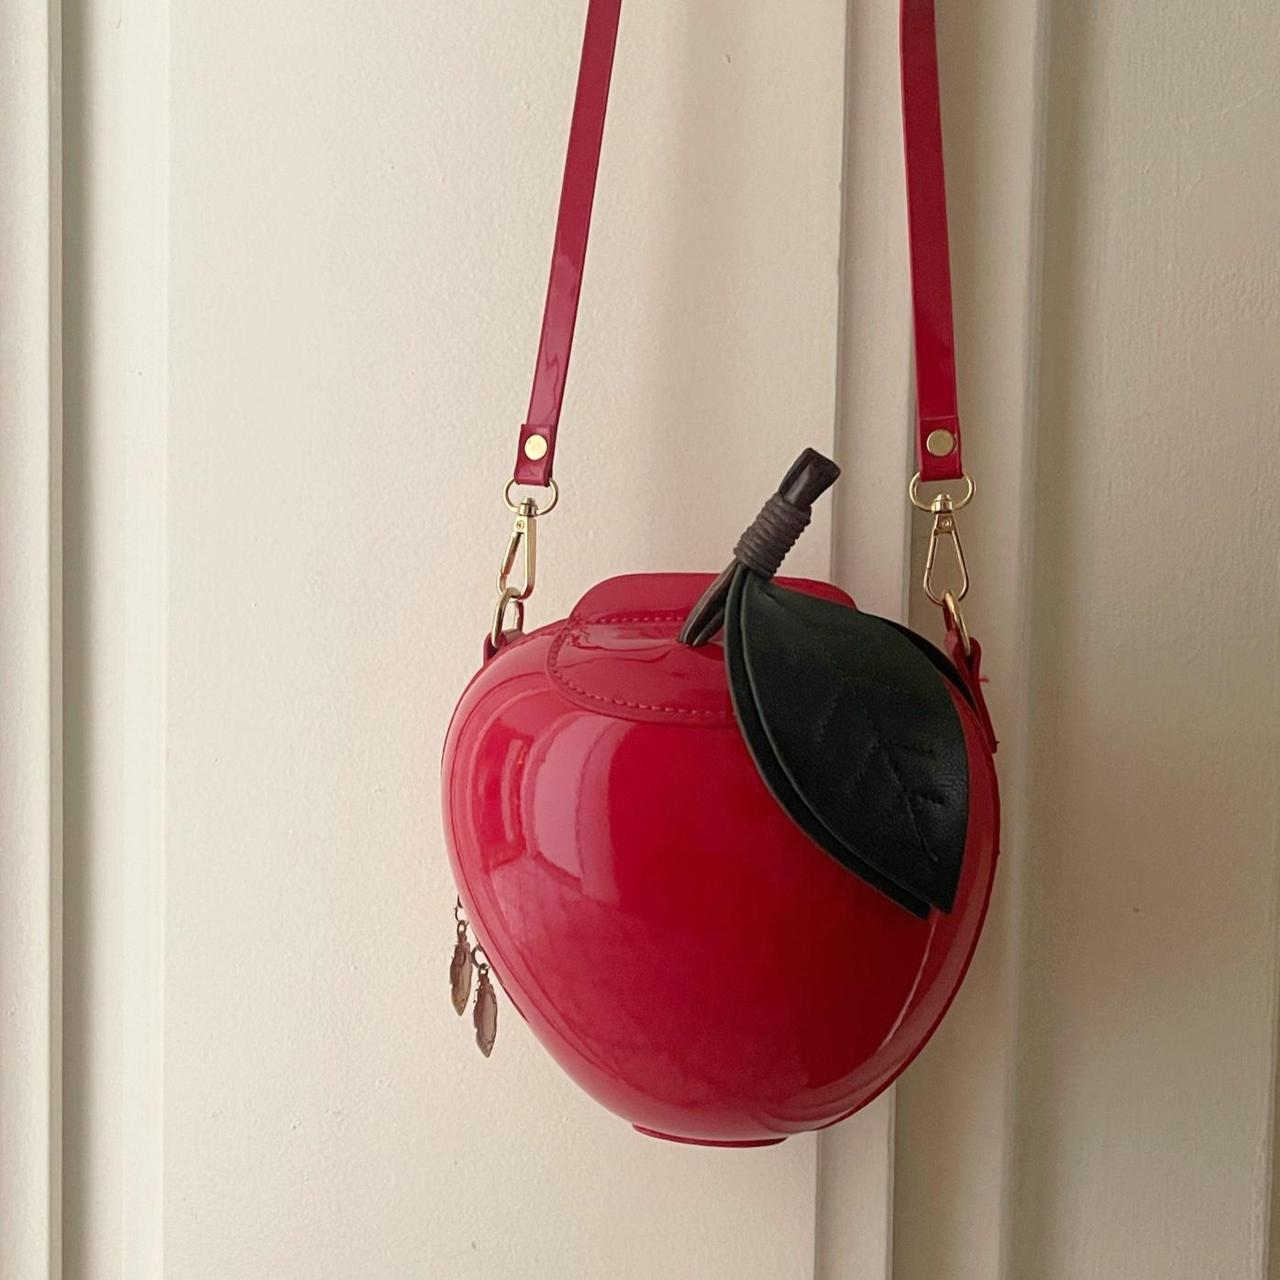 Red Apple Arcylic Evening Clutch Bag Purse Jewelry Box